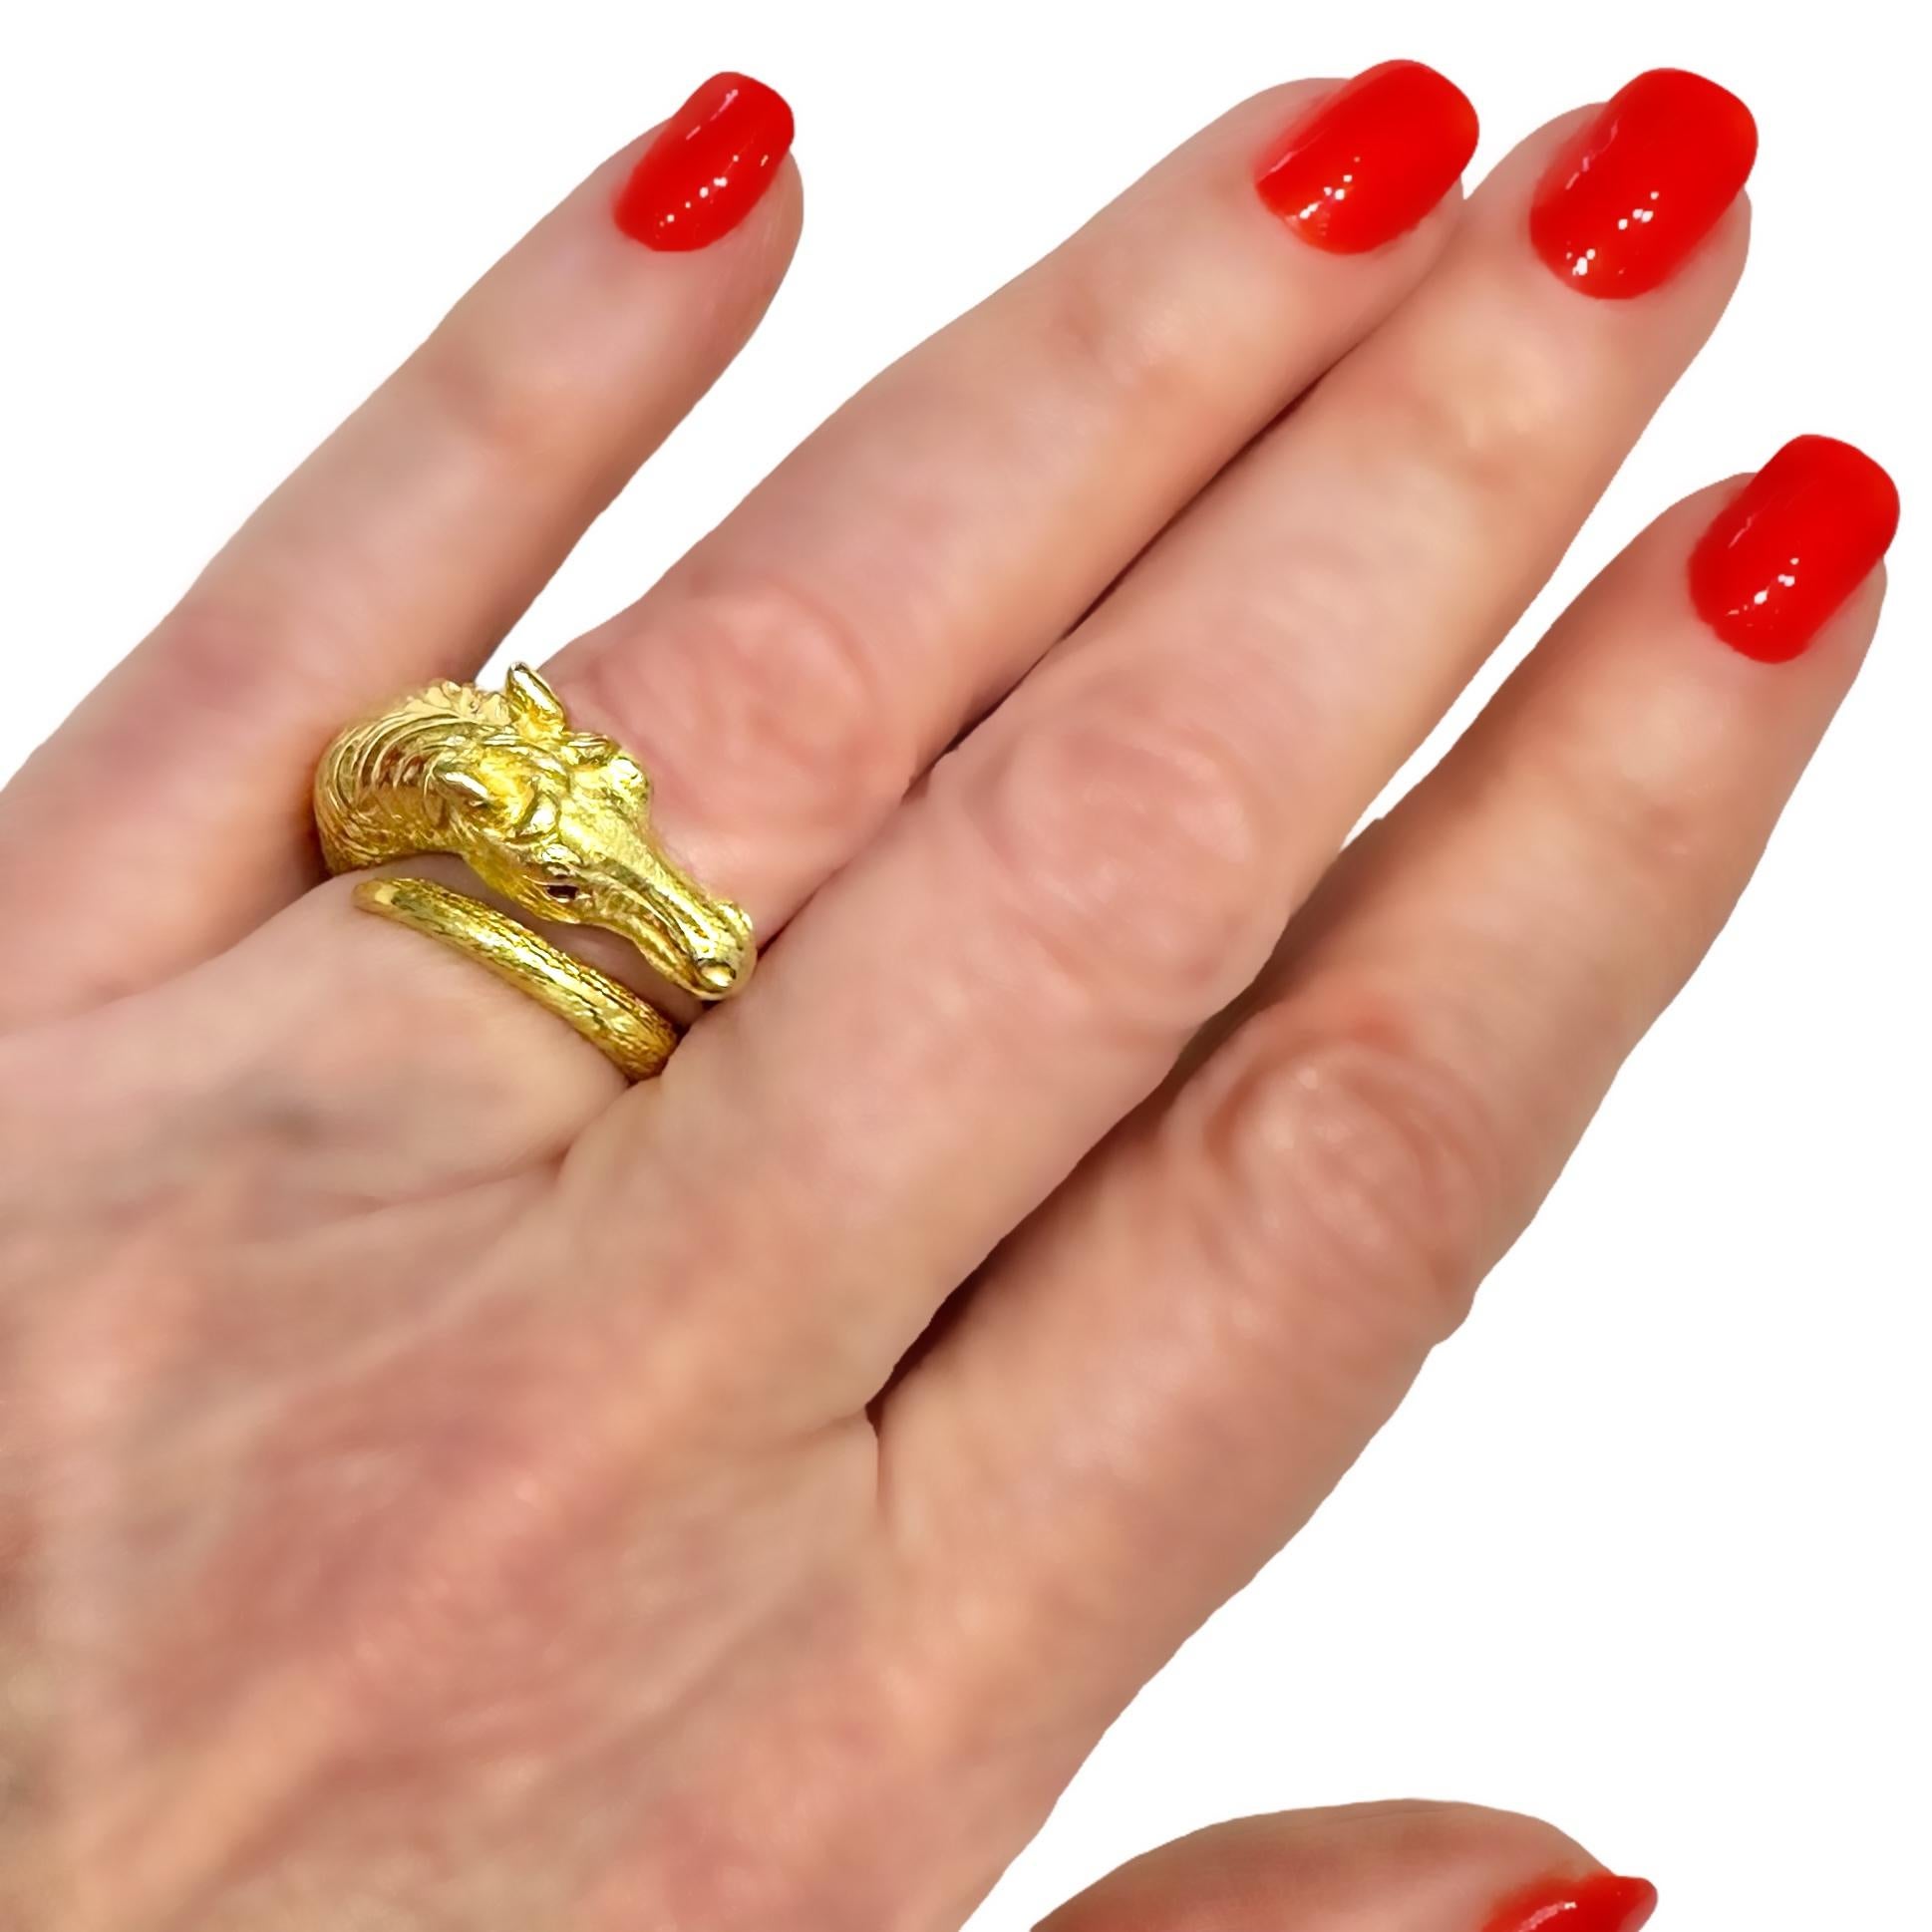  Lifelike Vintage George Lederman 18k Gold Equestrian Ring with Ruby Eyes For Sale 2